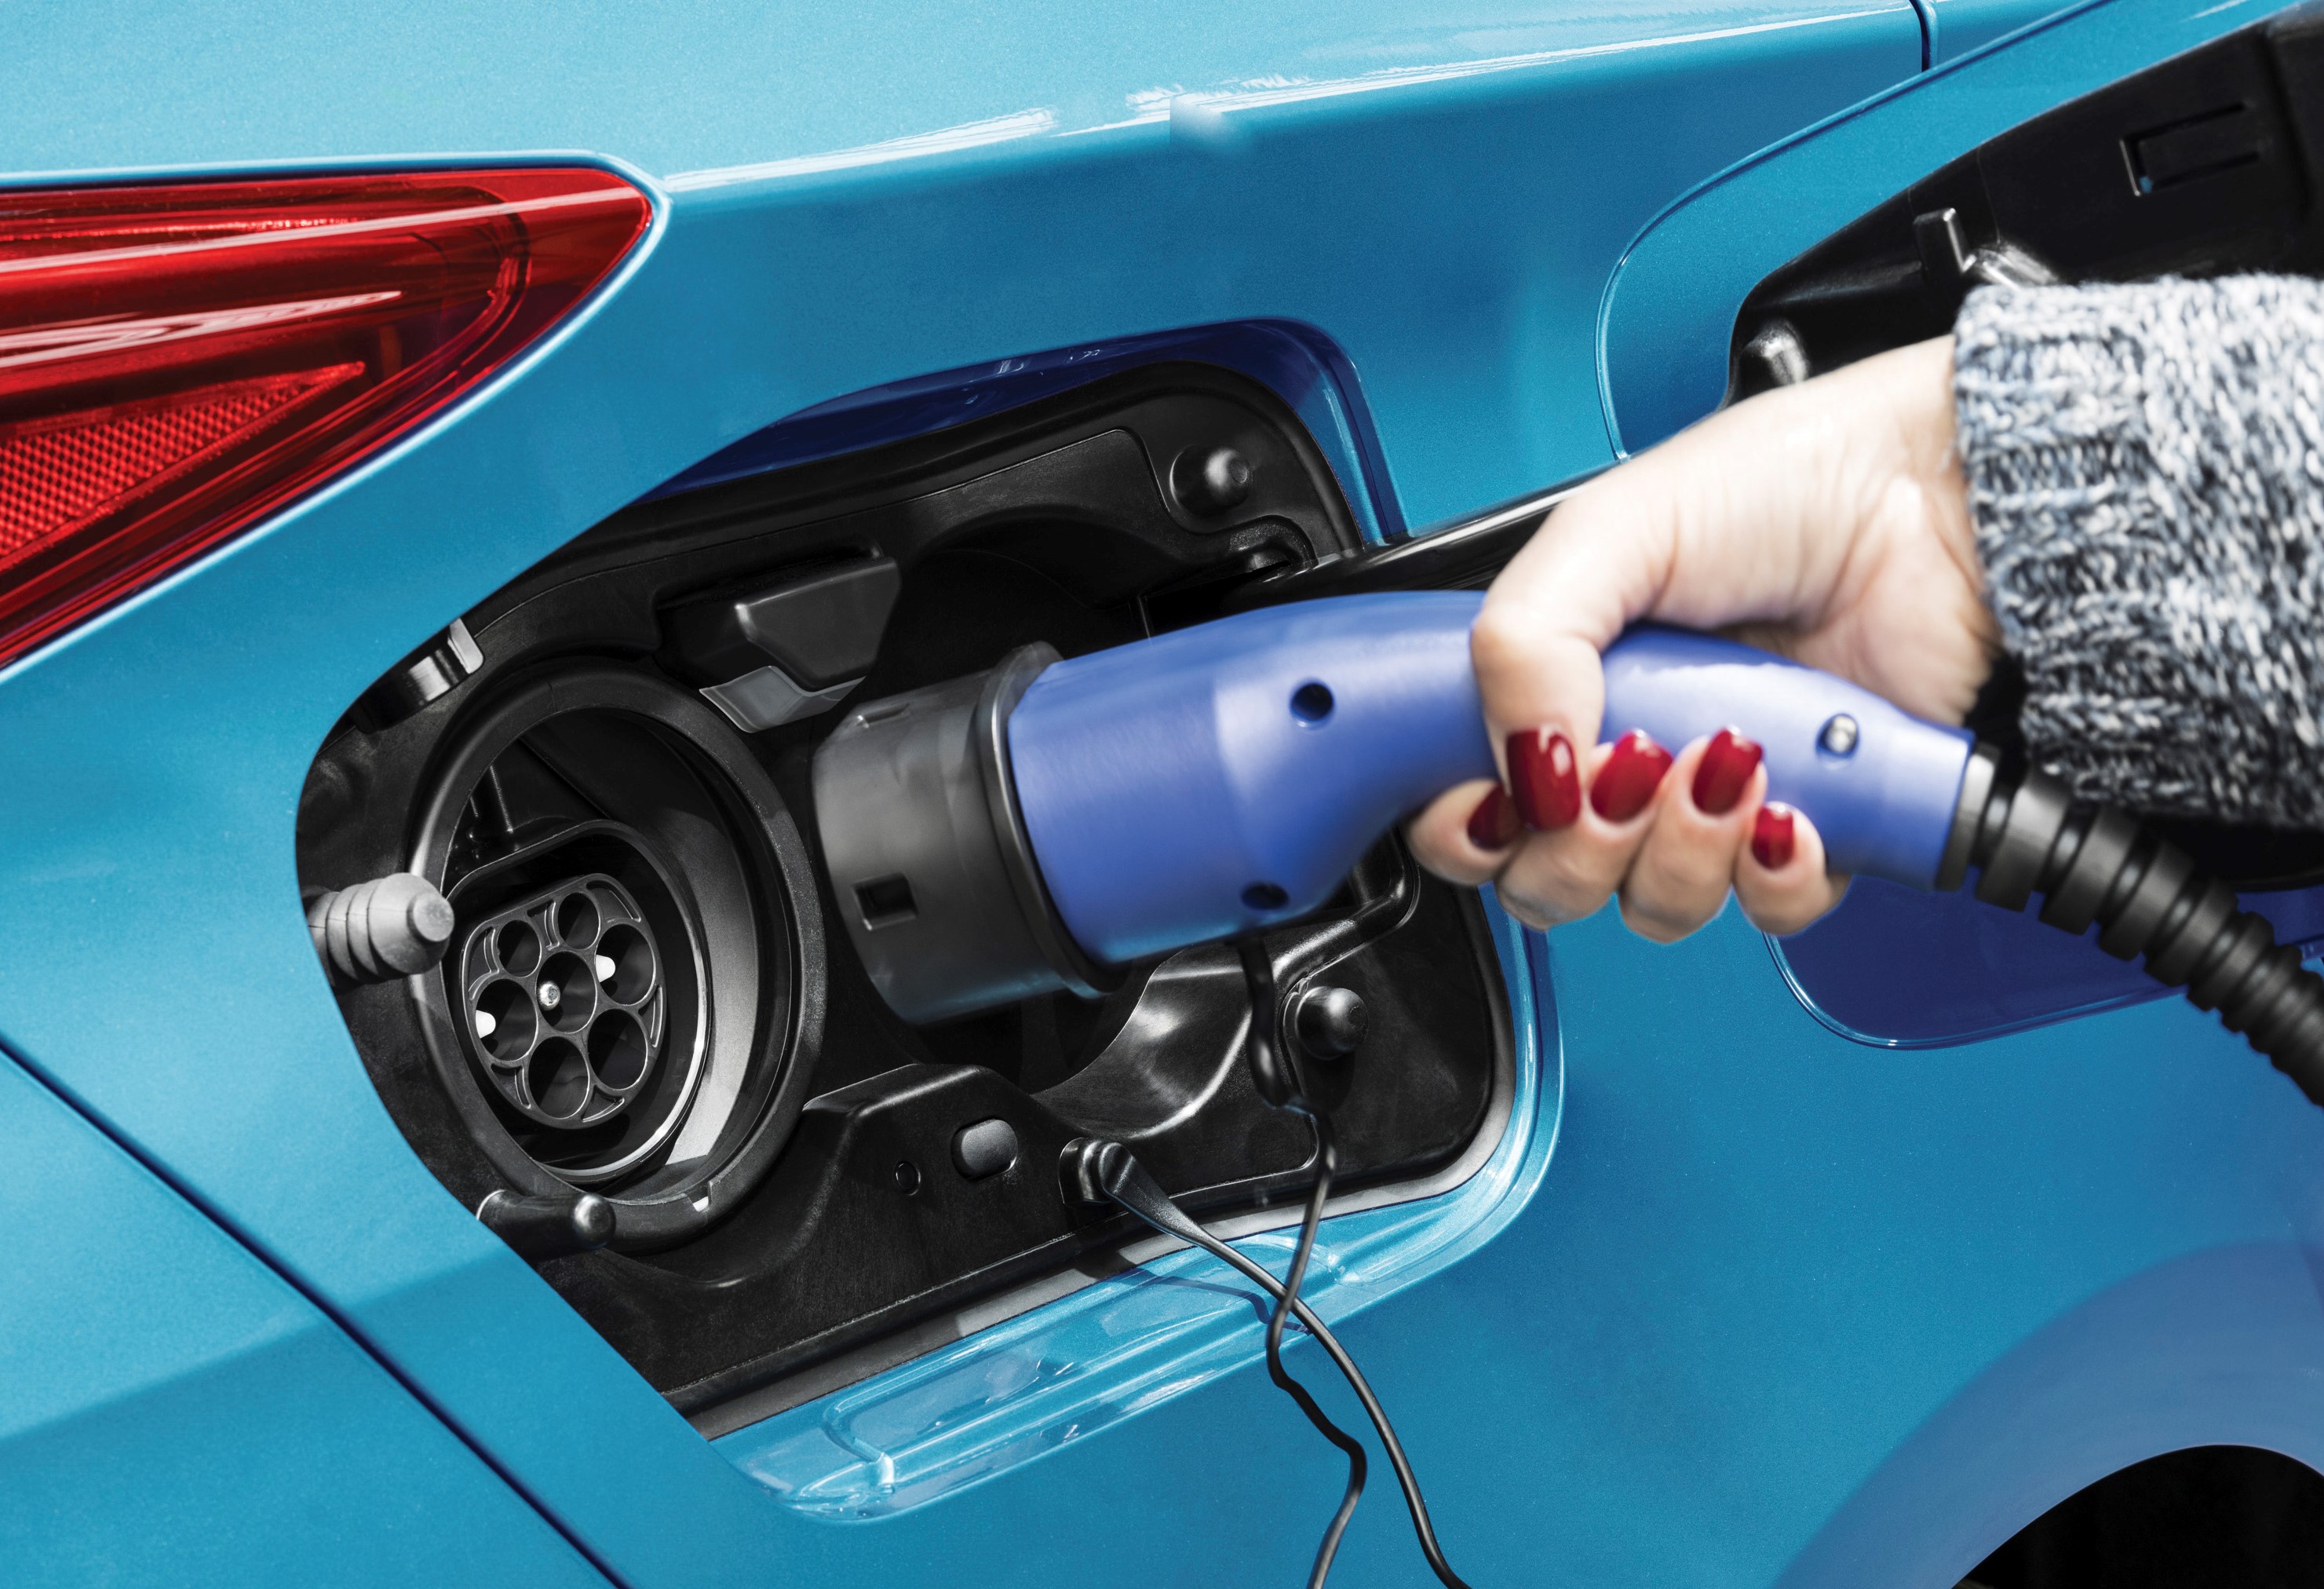 2018 plug in hybrid electric vehicle comparison